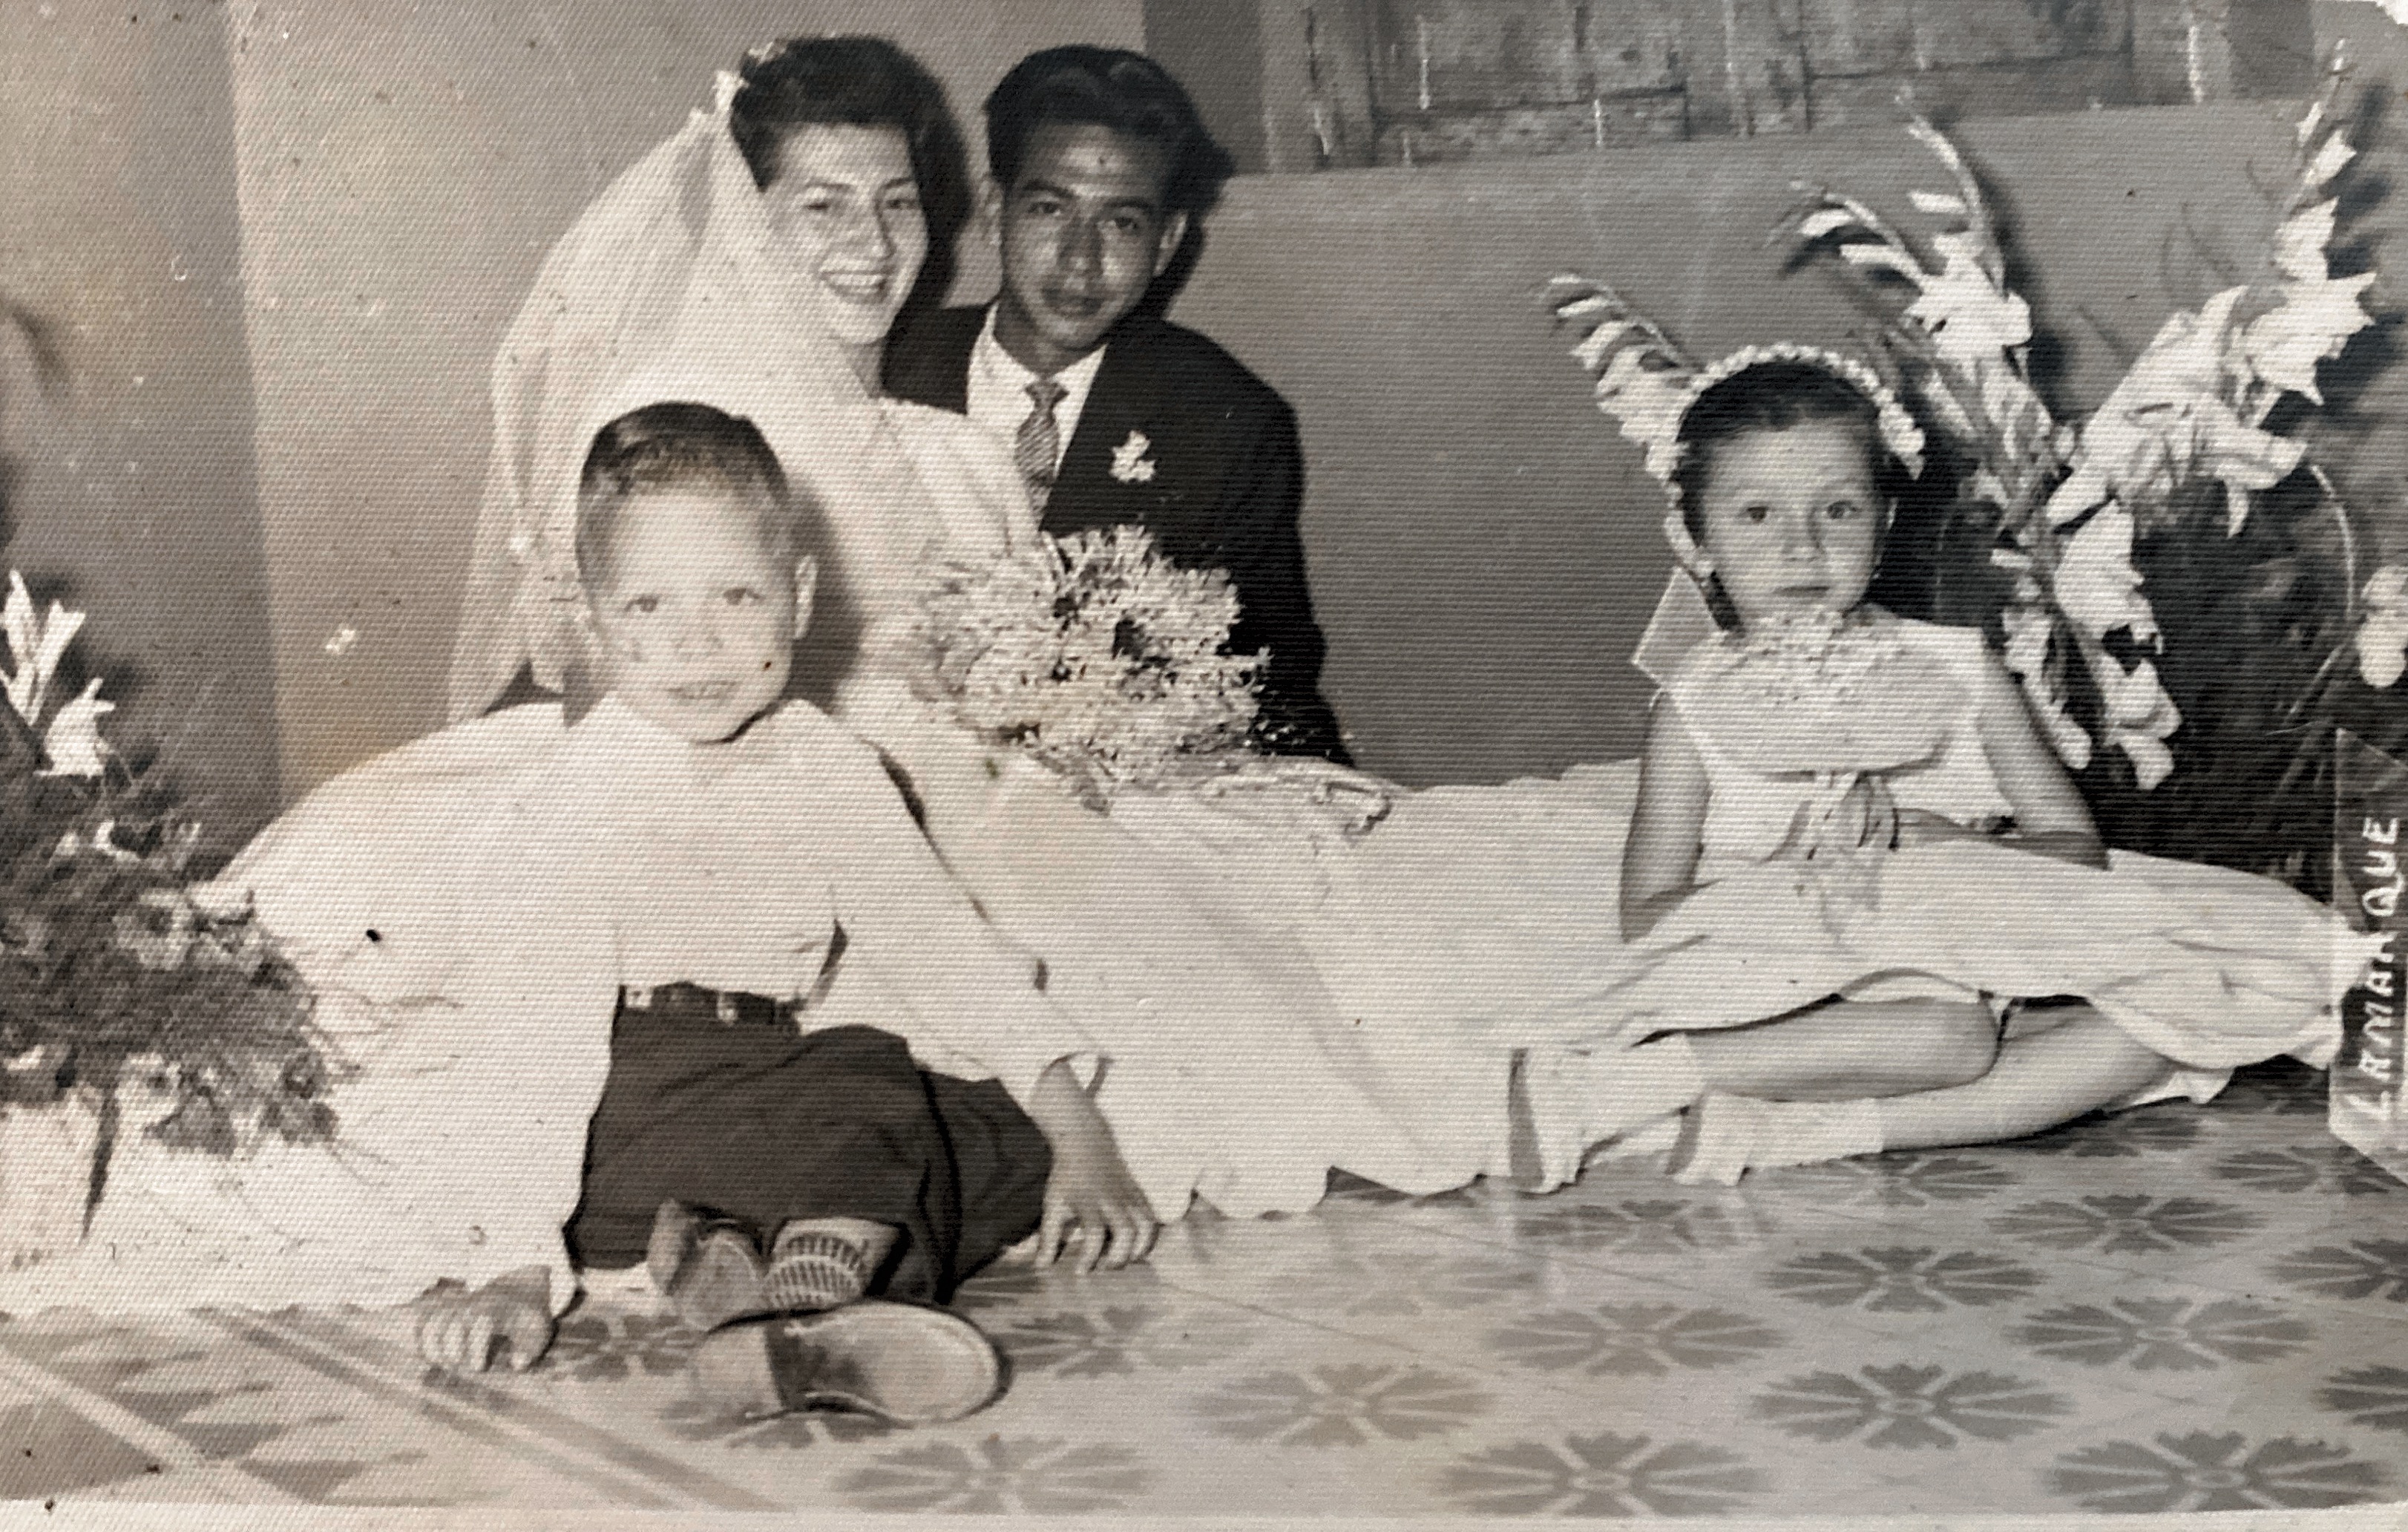 Matrimonio de papá y mamá 19 de marzo de 1960